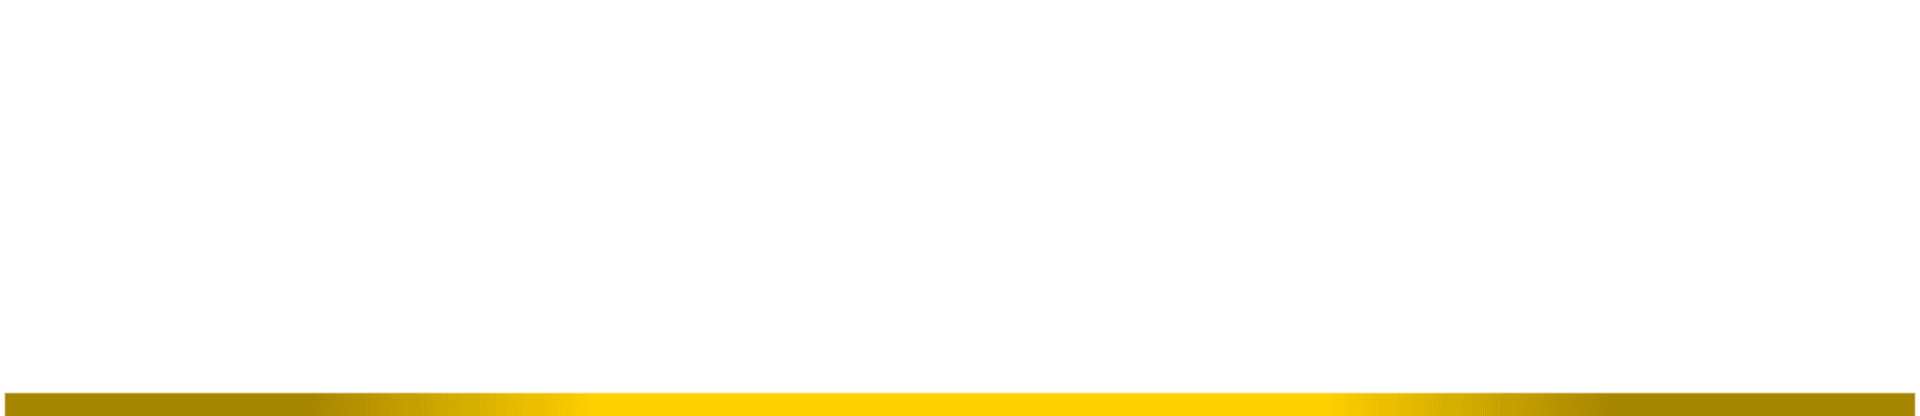 Alex Cross - Abogado Criminalista